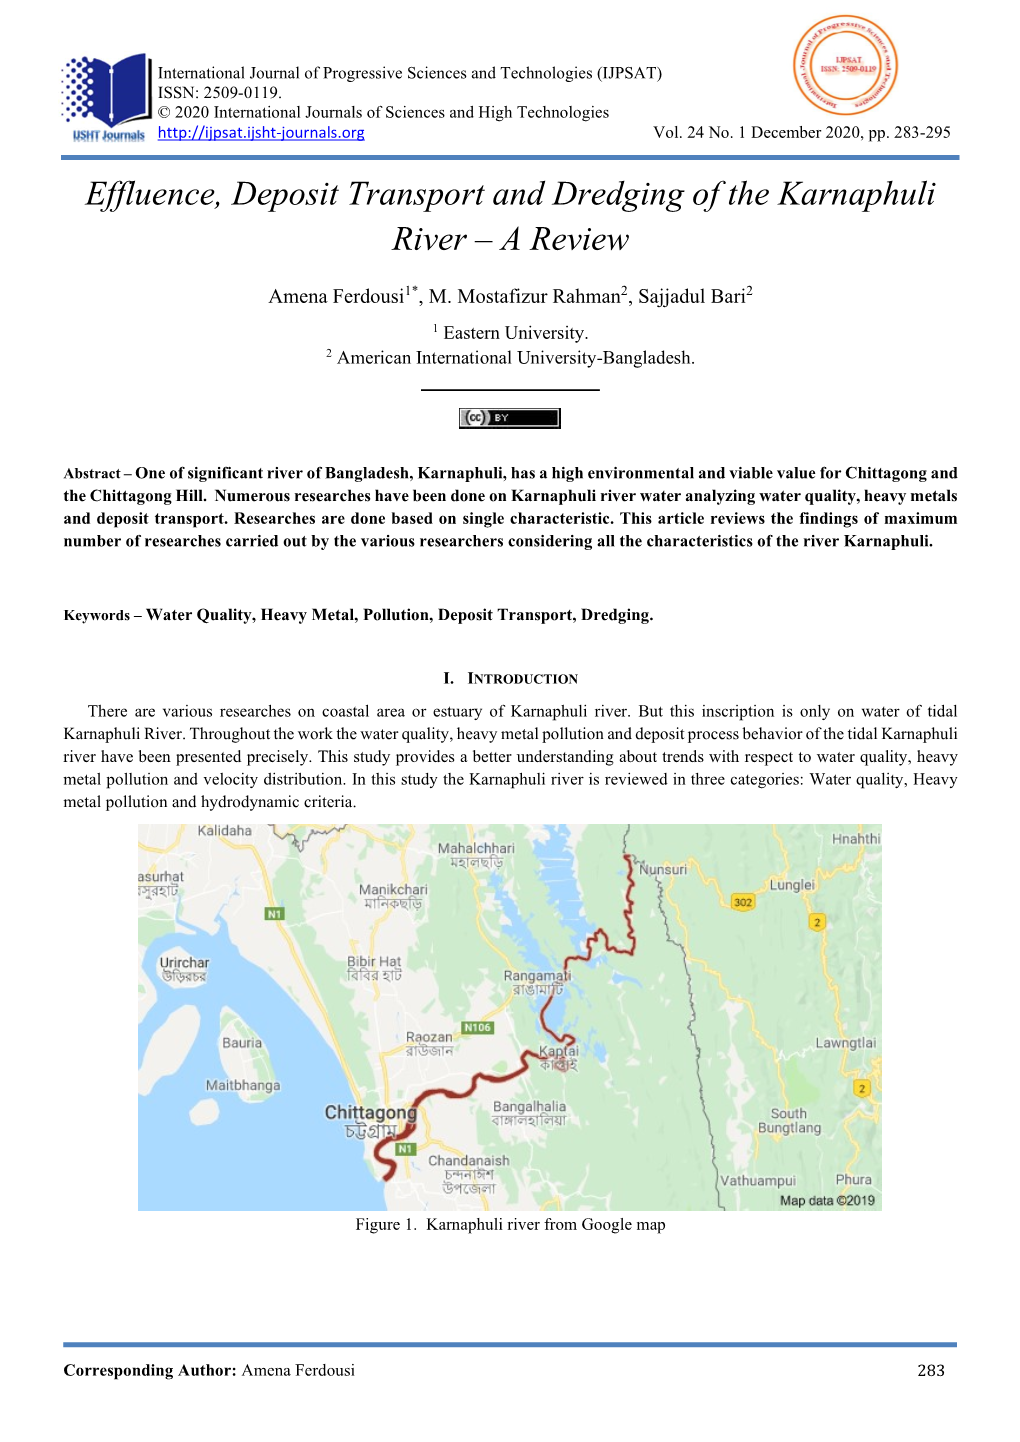 Effluence, Deposit Transport and Dredging of the Karnaphuli River – a Review